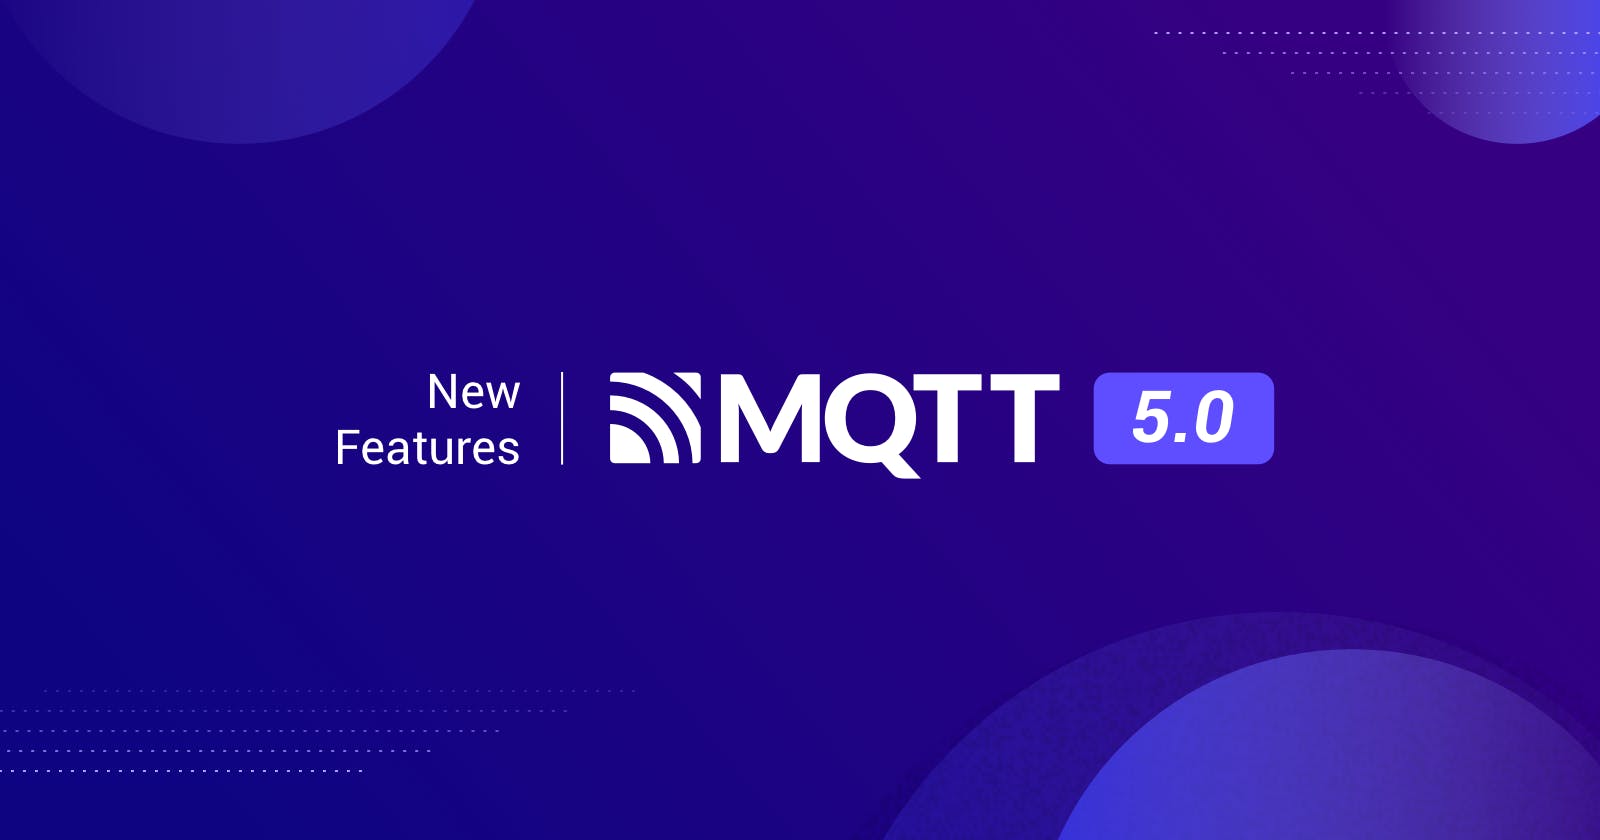 Request Response - MQTT 5.0 New Features